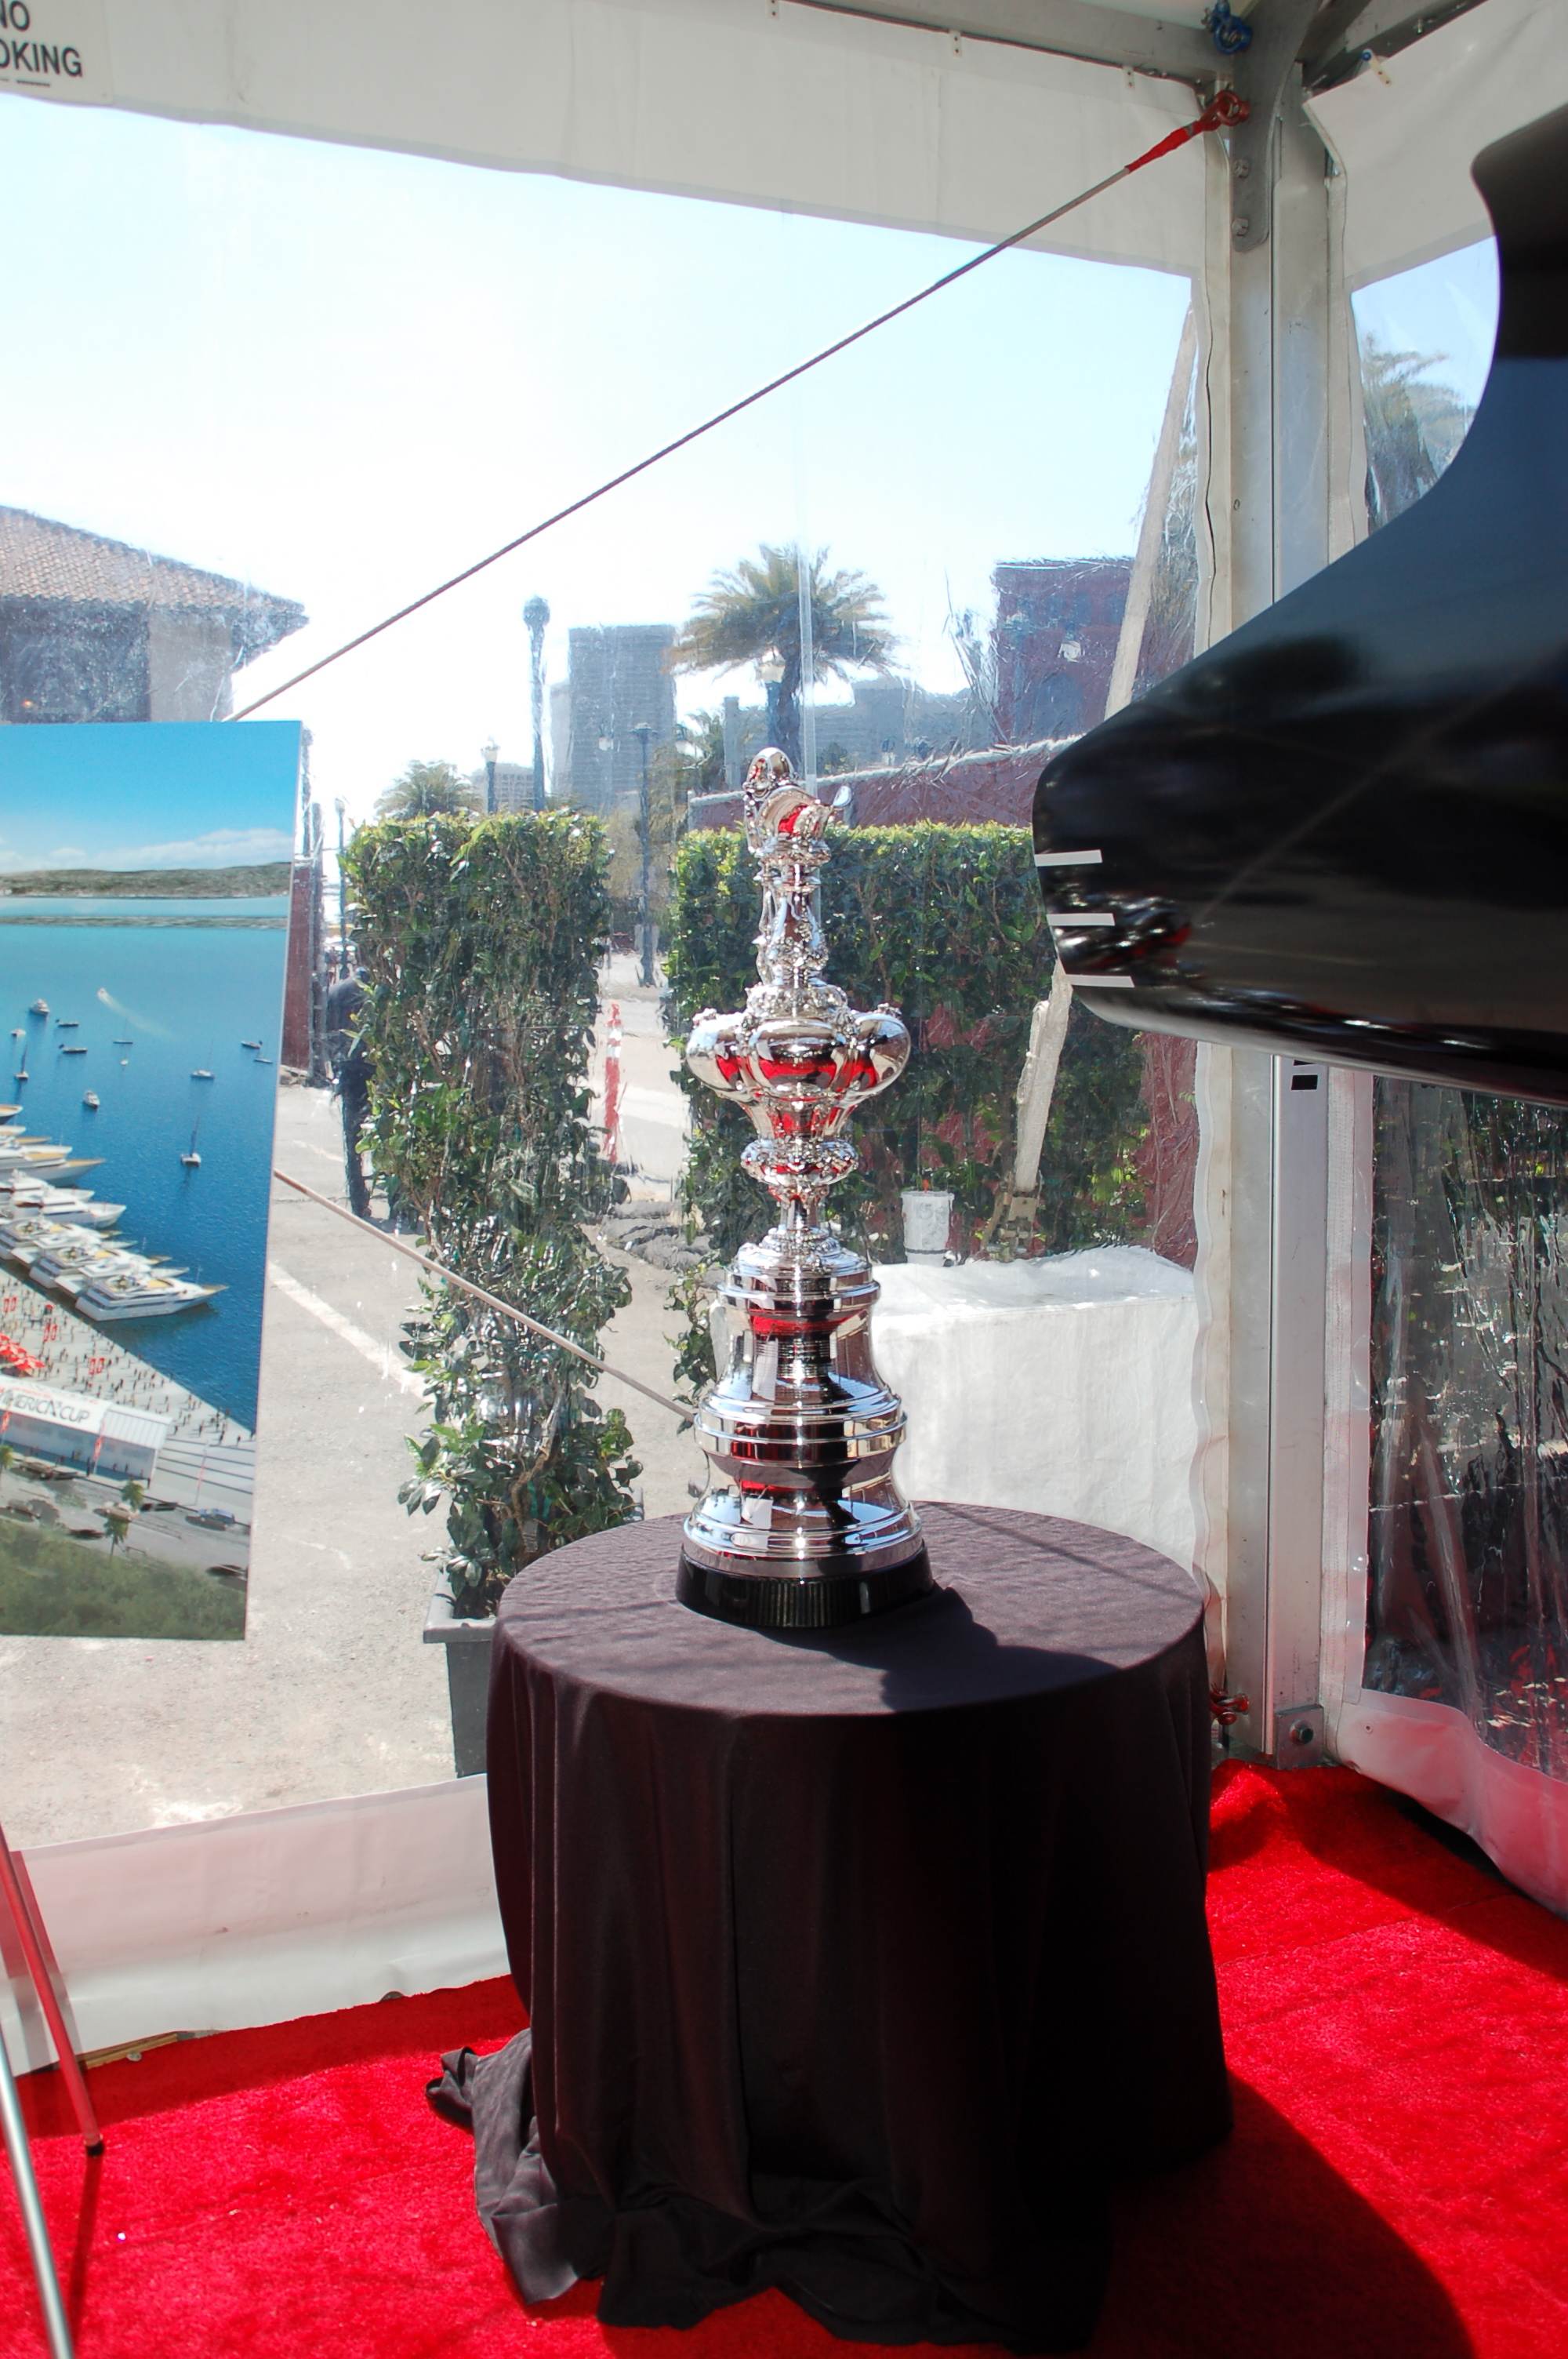 America's Cup joins Summer Sailstice Celebration in Alameda